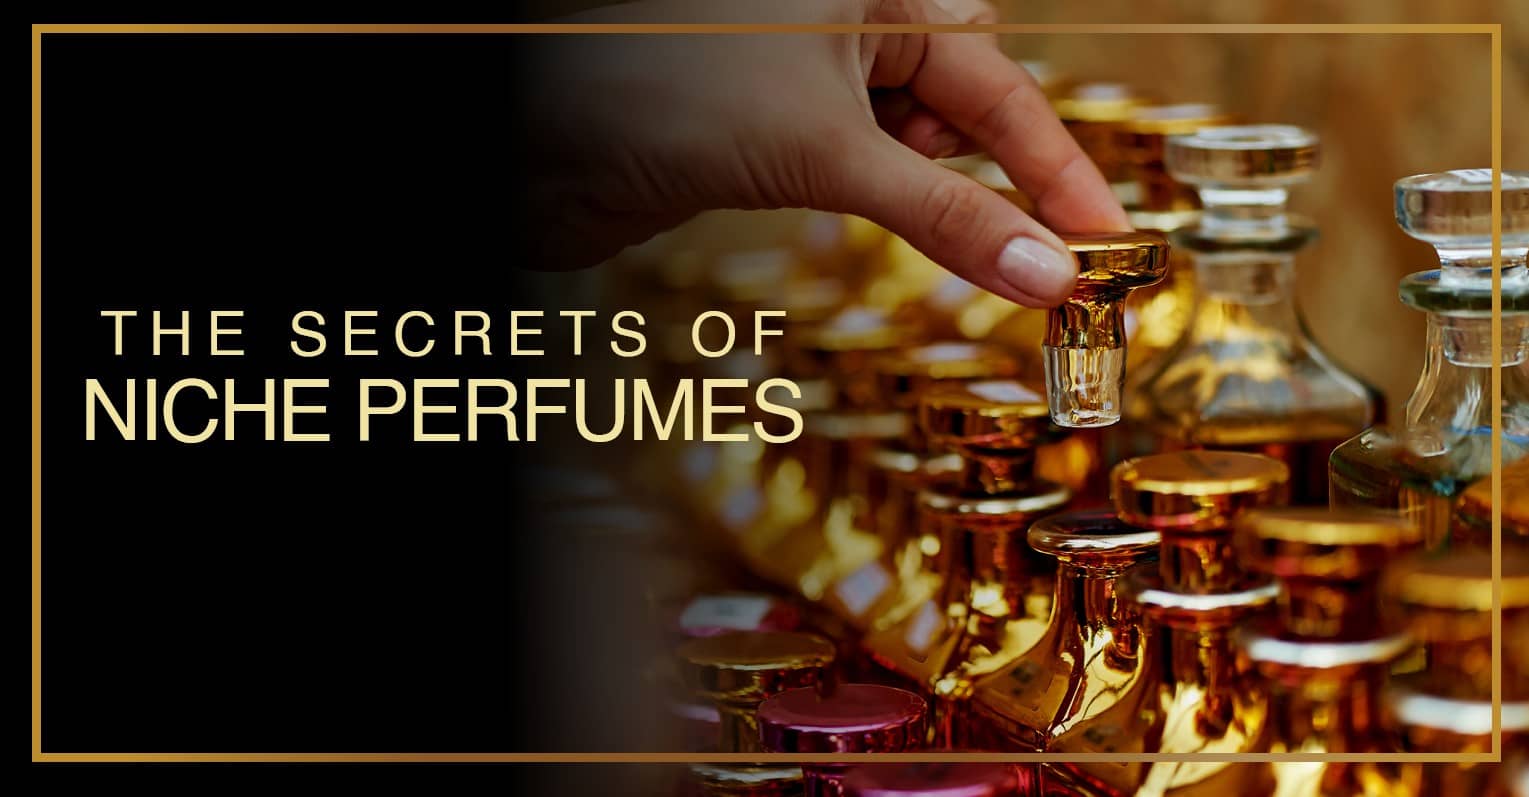 The secrets of niche perfumes!